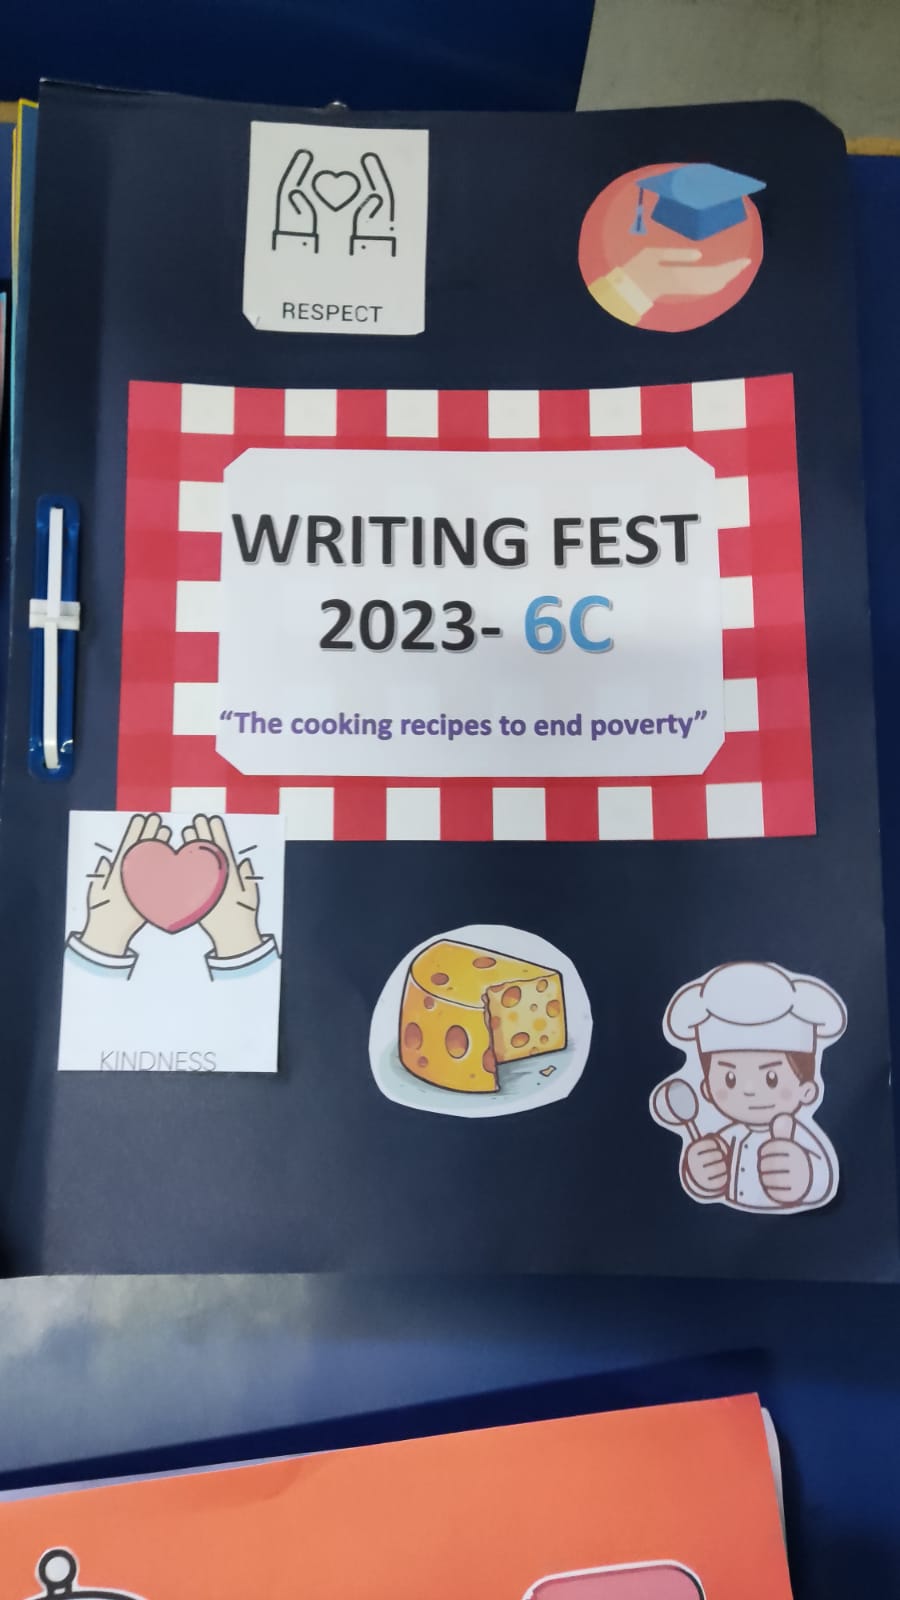 Finalizamos nuestro Hito Writing Fest